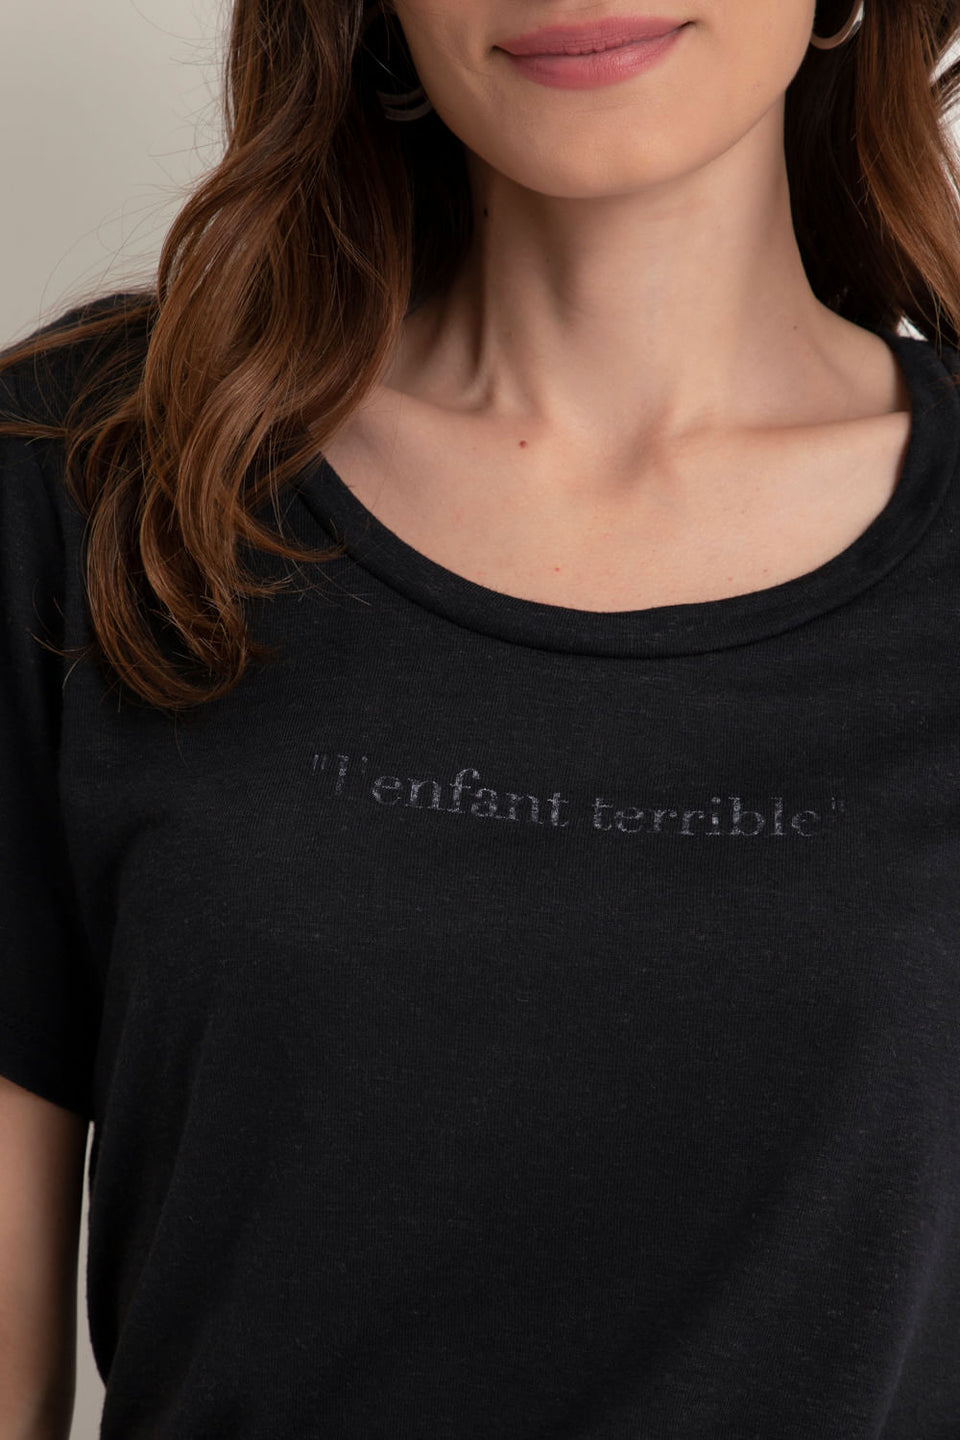 Camiseta L´enfant Terrible Preto